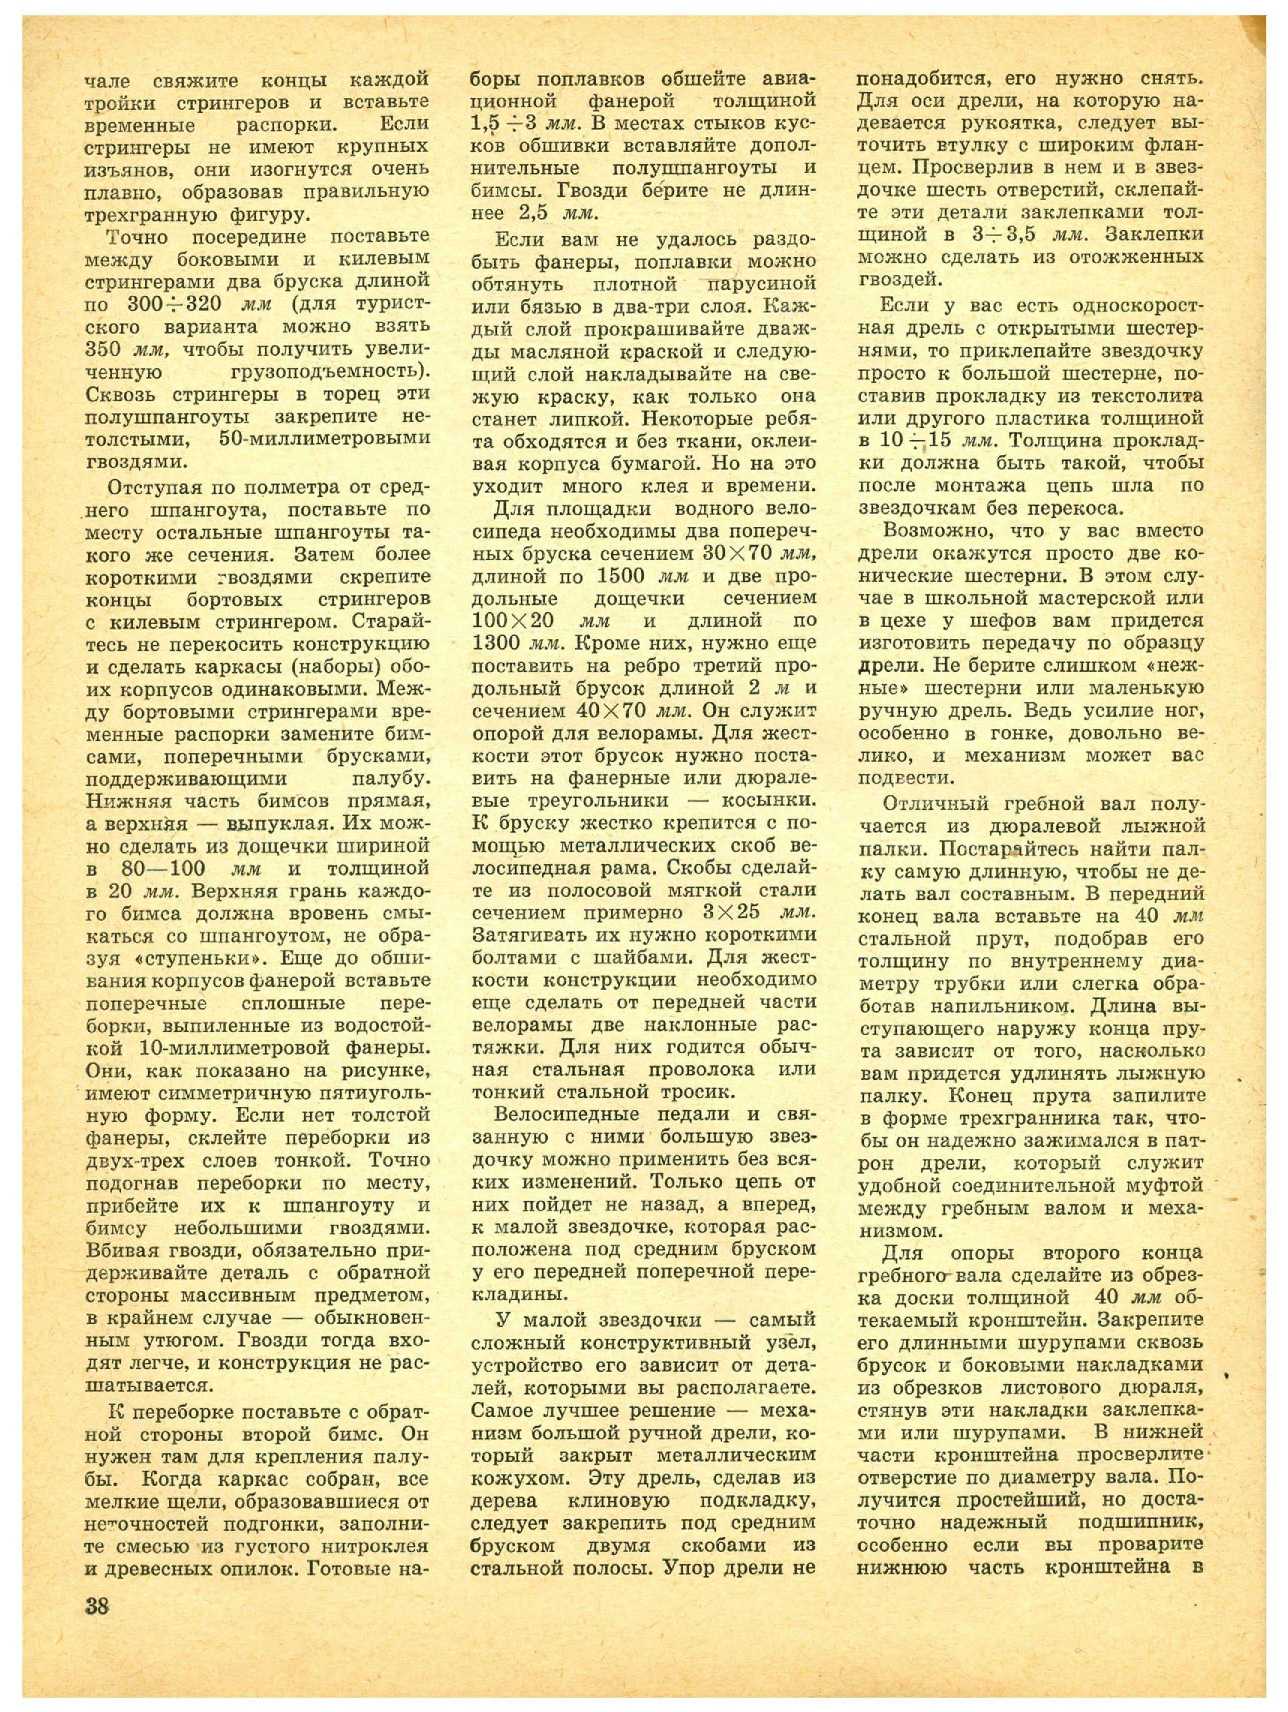 ЮМК 13, 1965, 38 c.